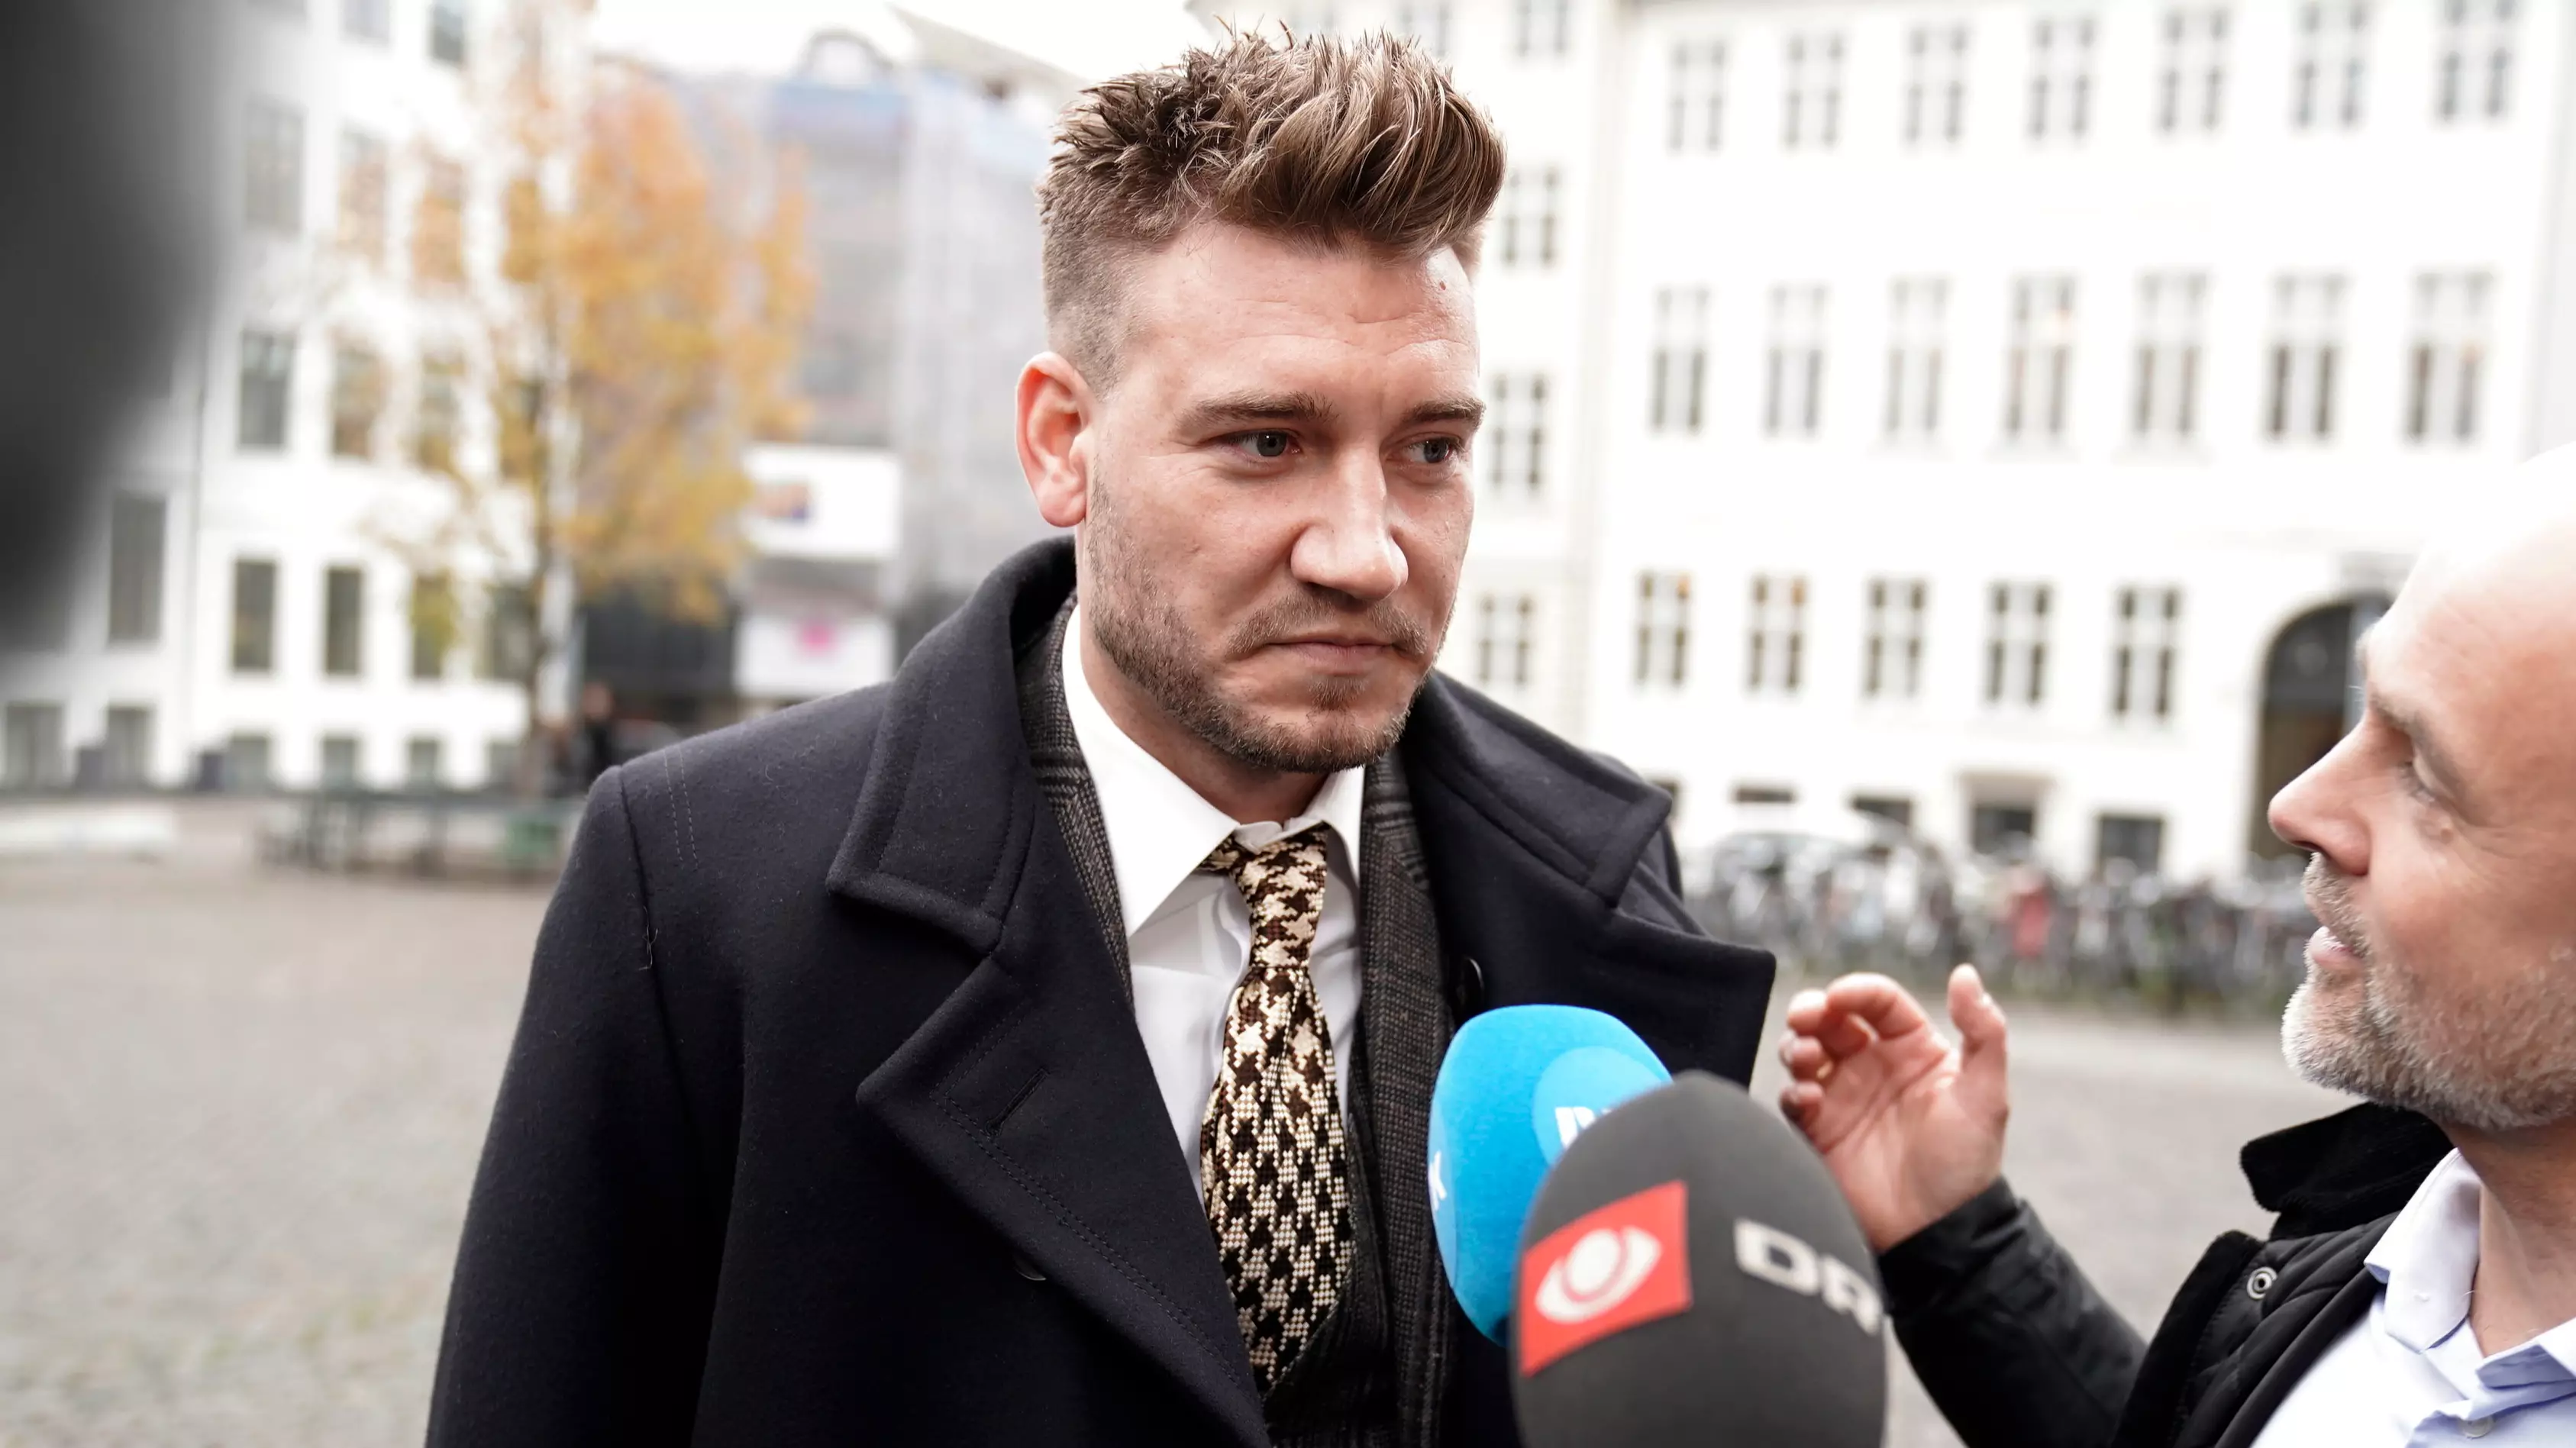 Nicklas Bendtner Sentenced To 50 Days In Prison